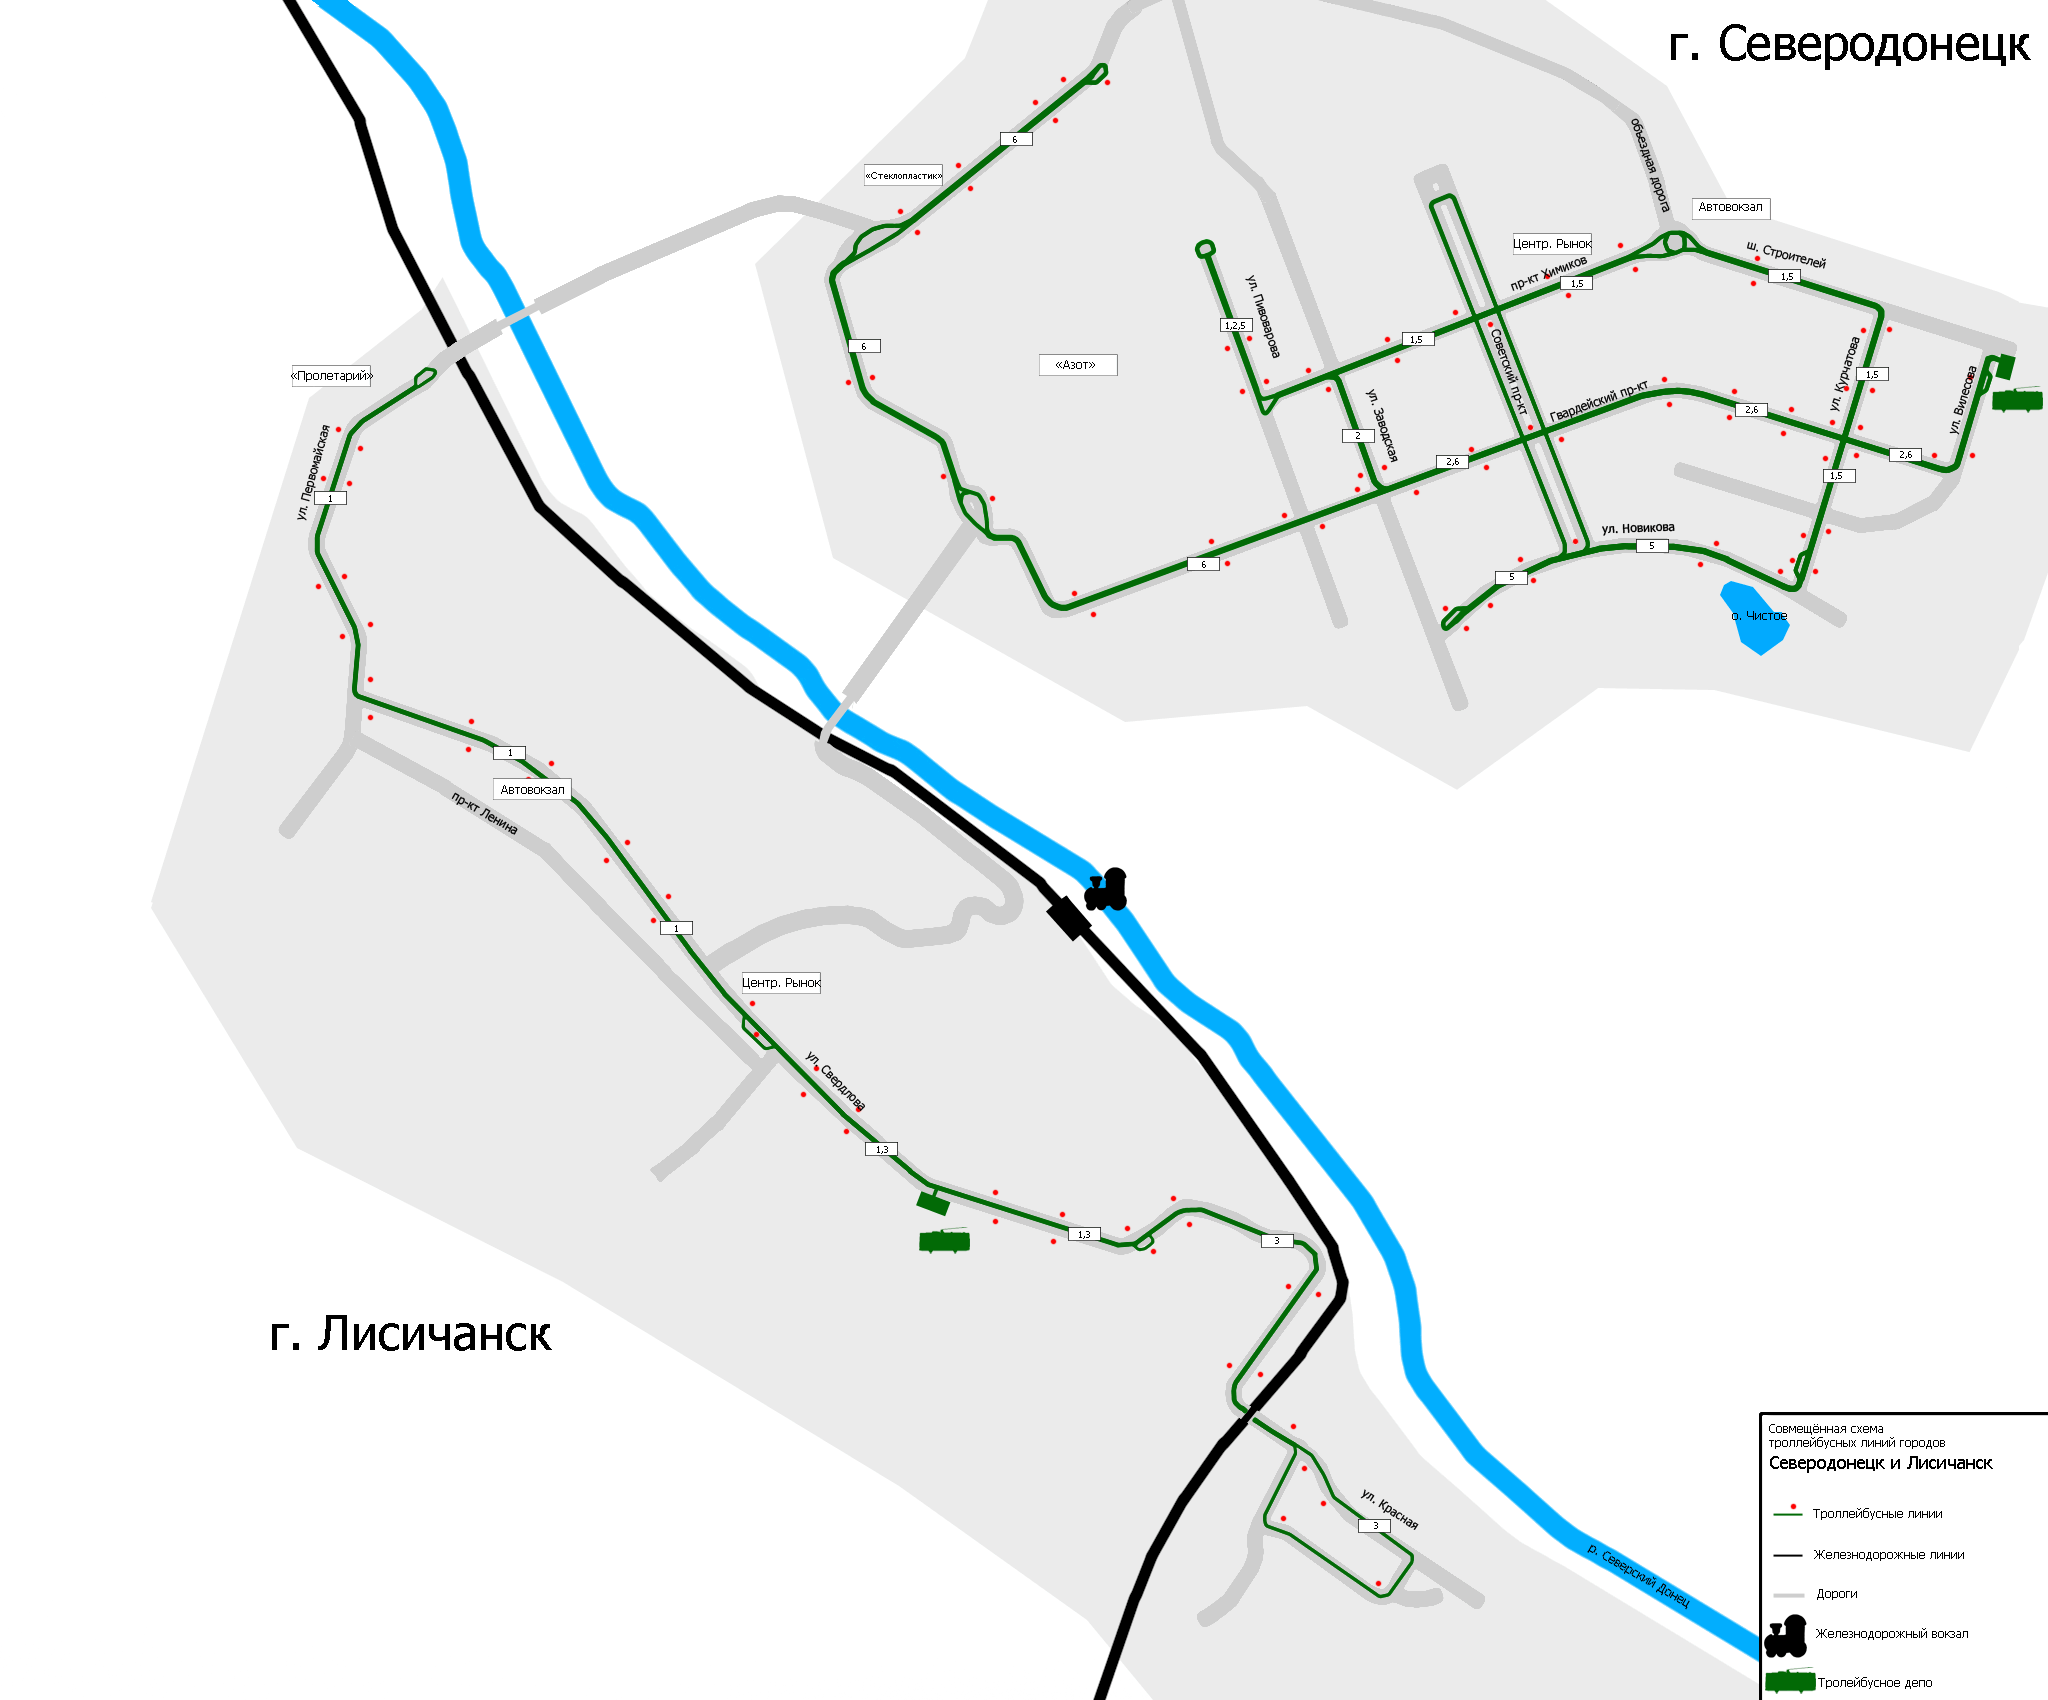 Sievierodonetsk — Maps; Lyssytchansk — Route maps